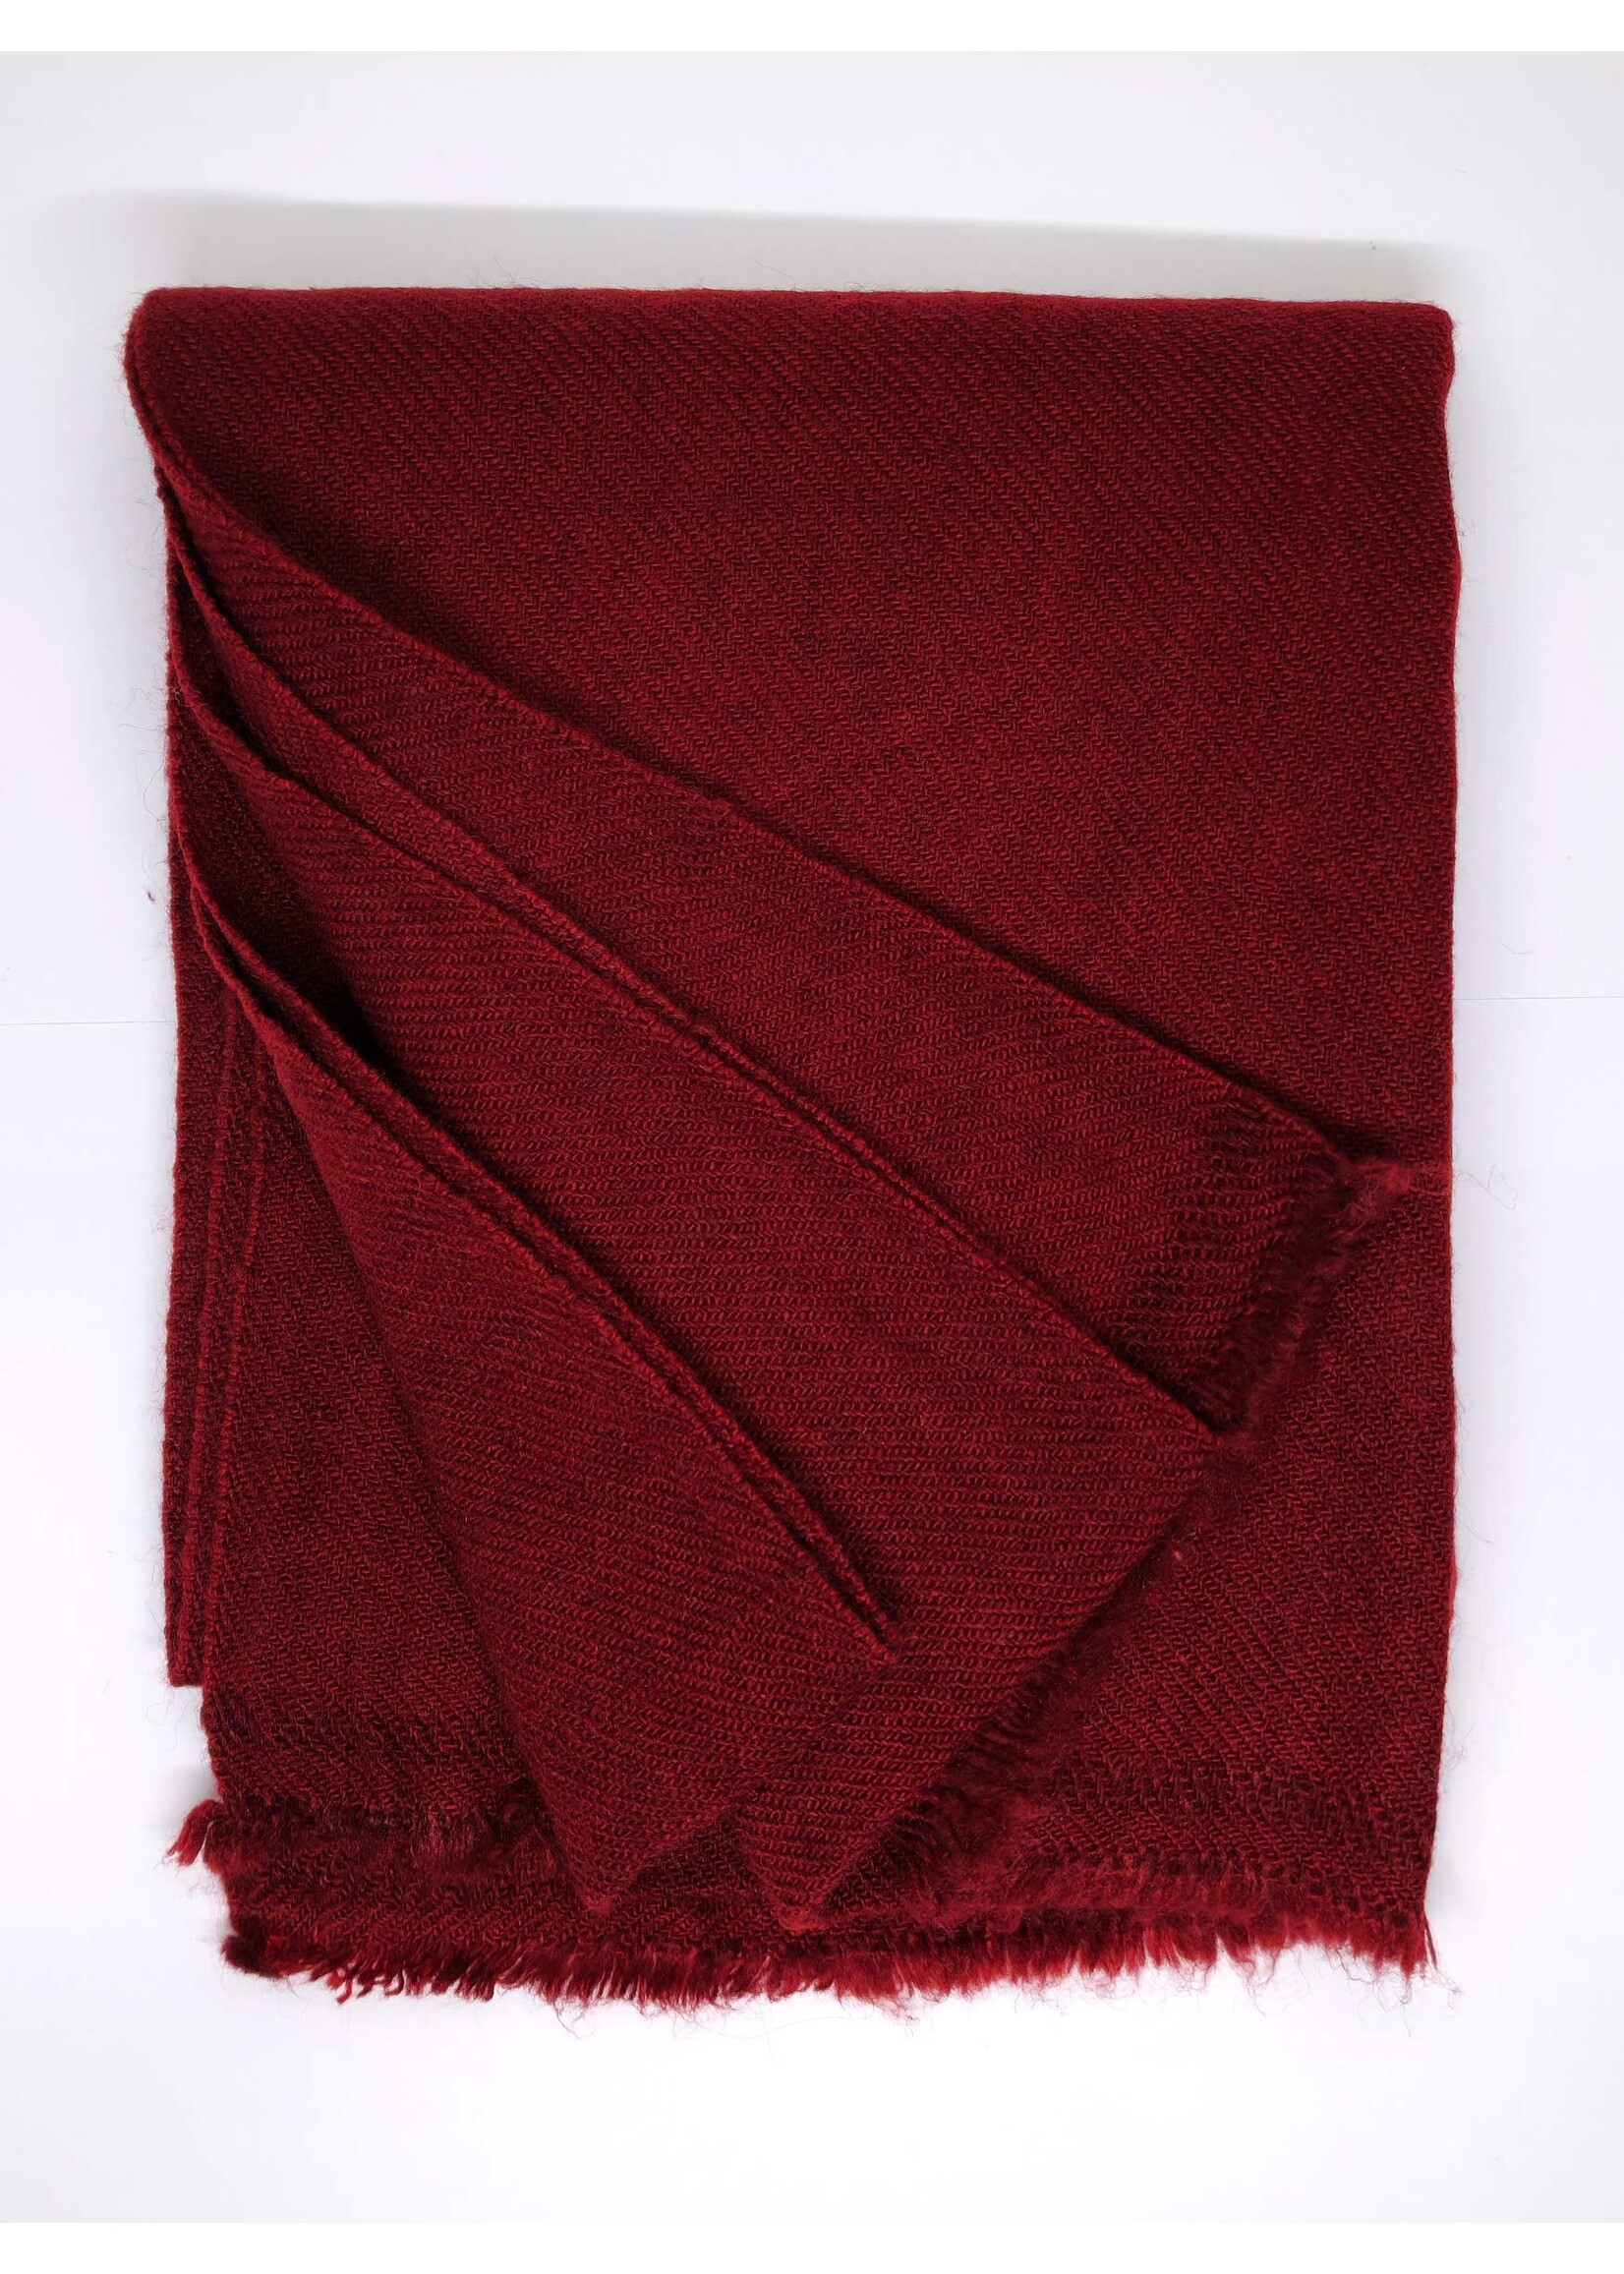 Écharpe pashmina rouge bourgogne, 35 x 160 cm